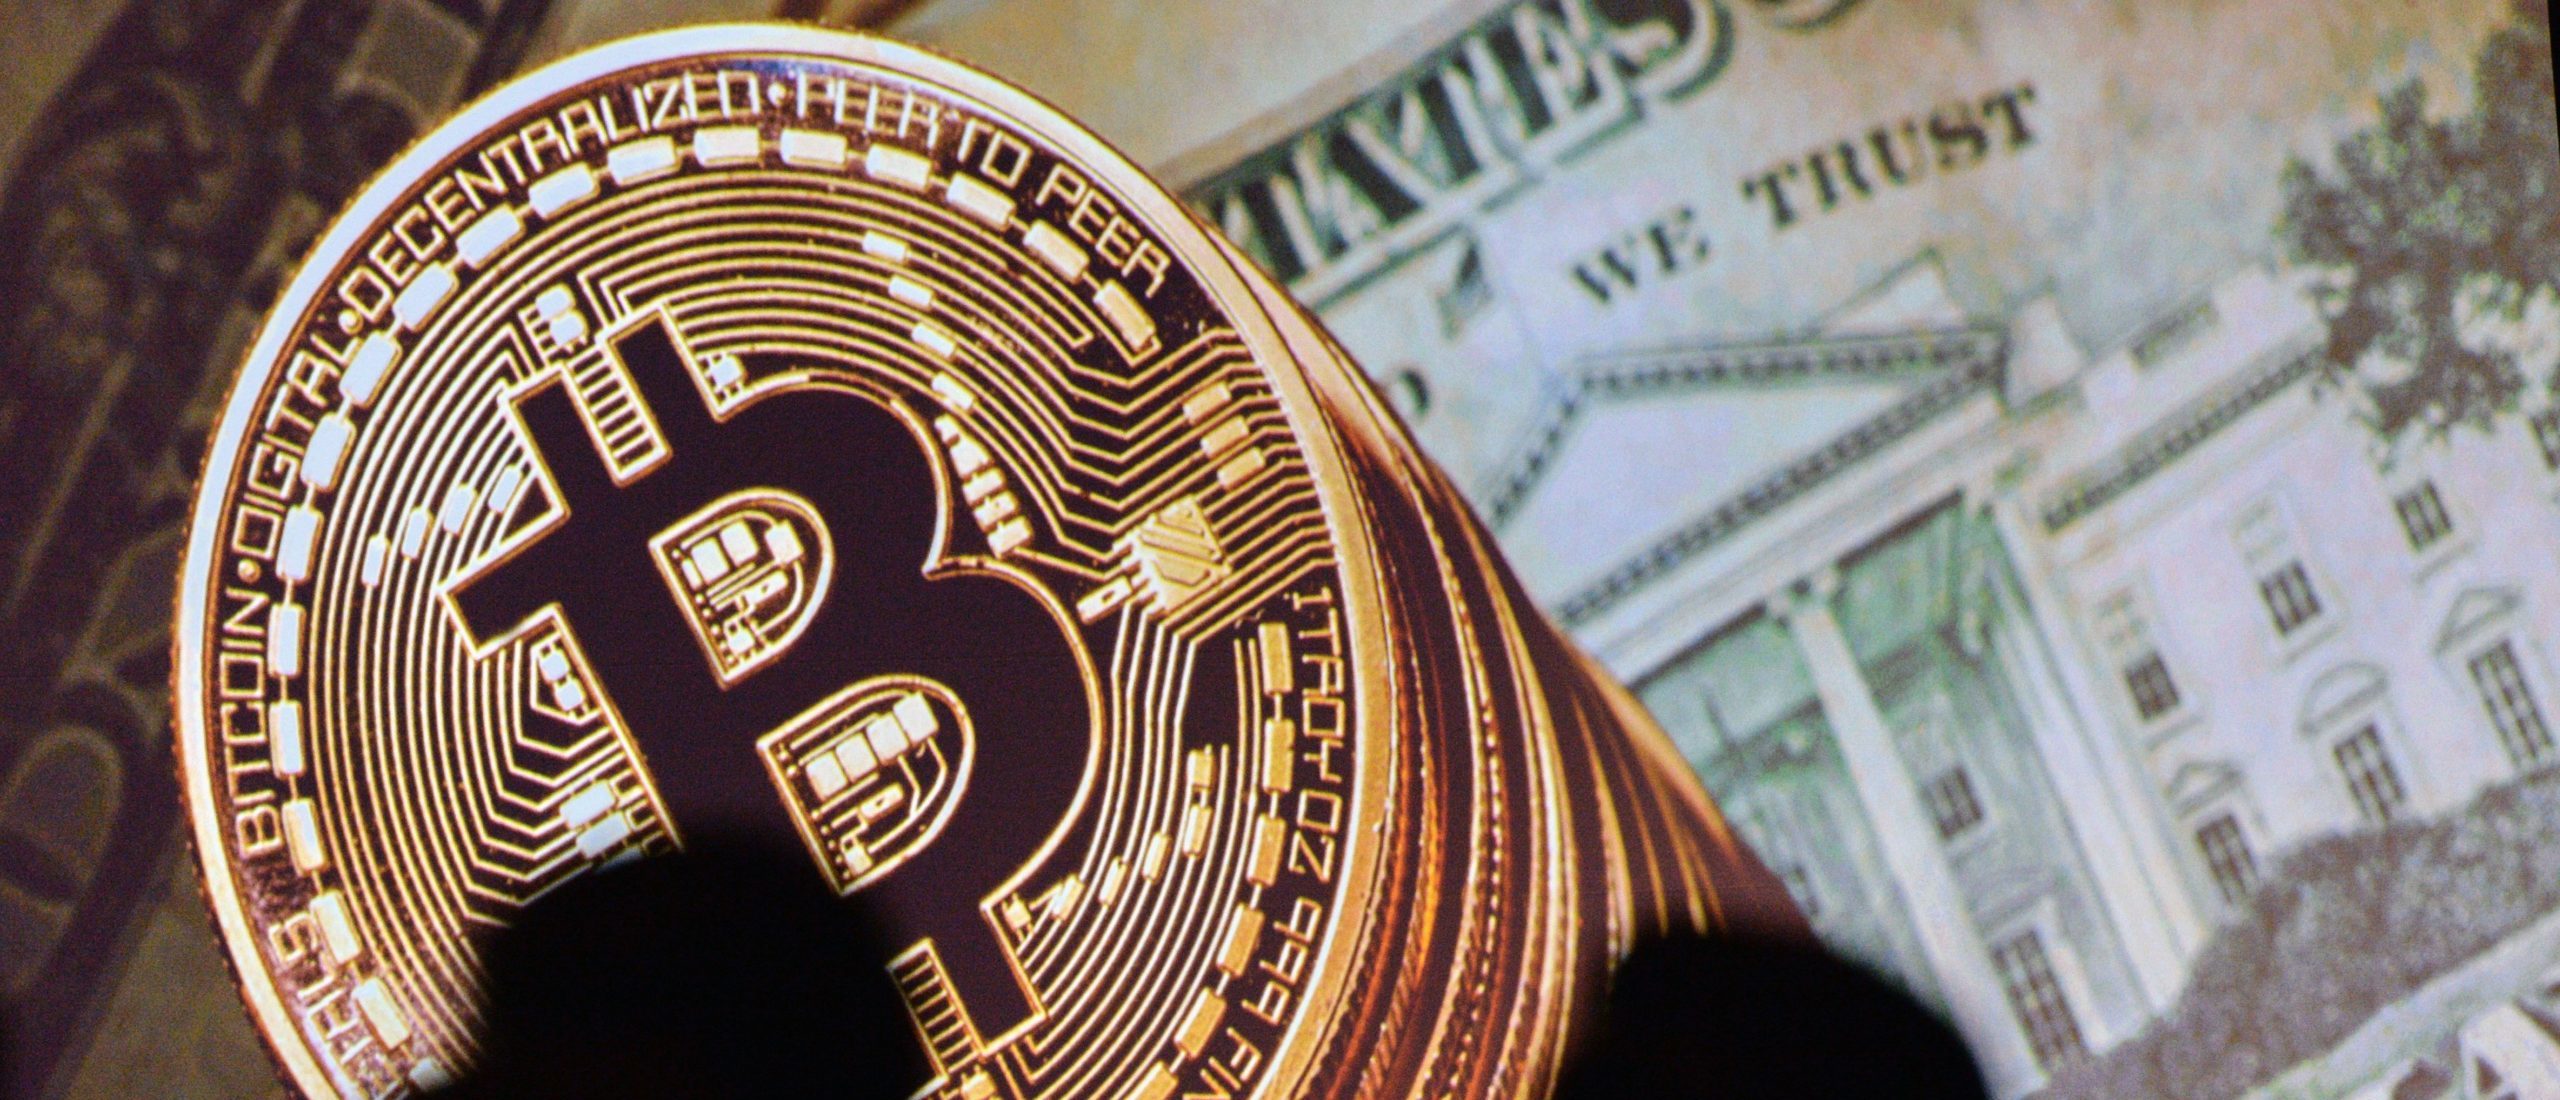 6 million dollars in bitcoins hacked fbi investigating draftkings